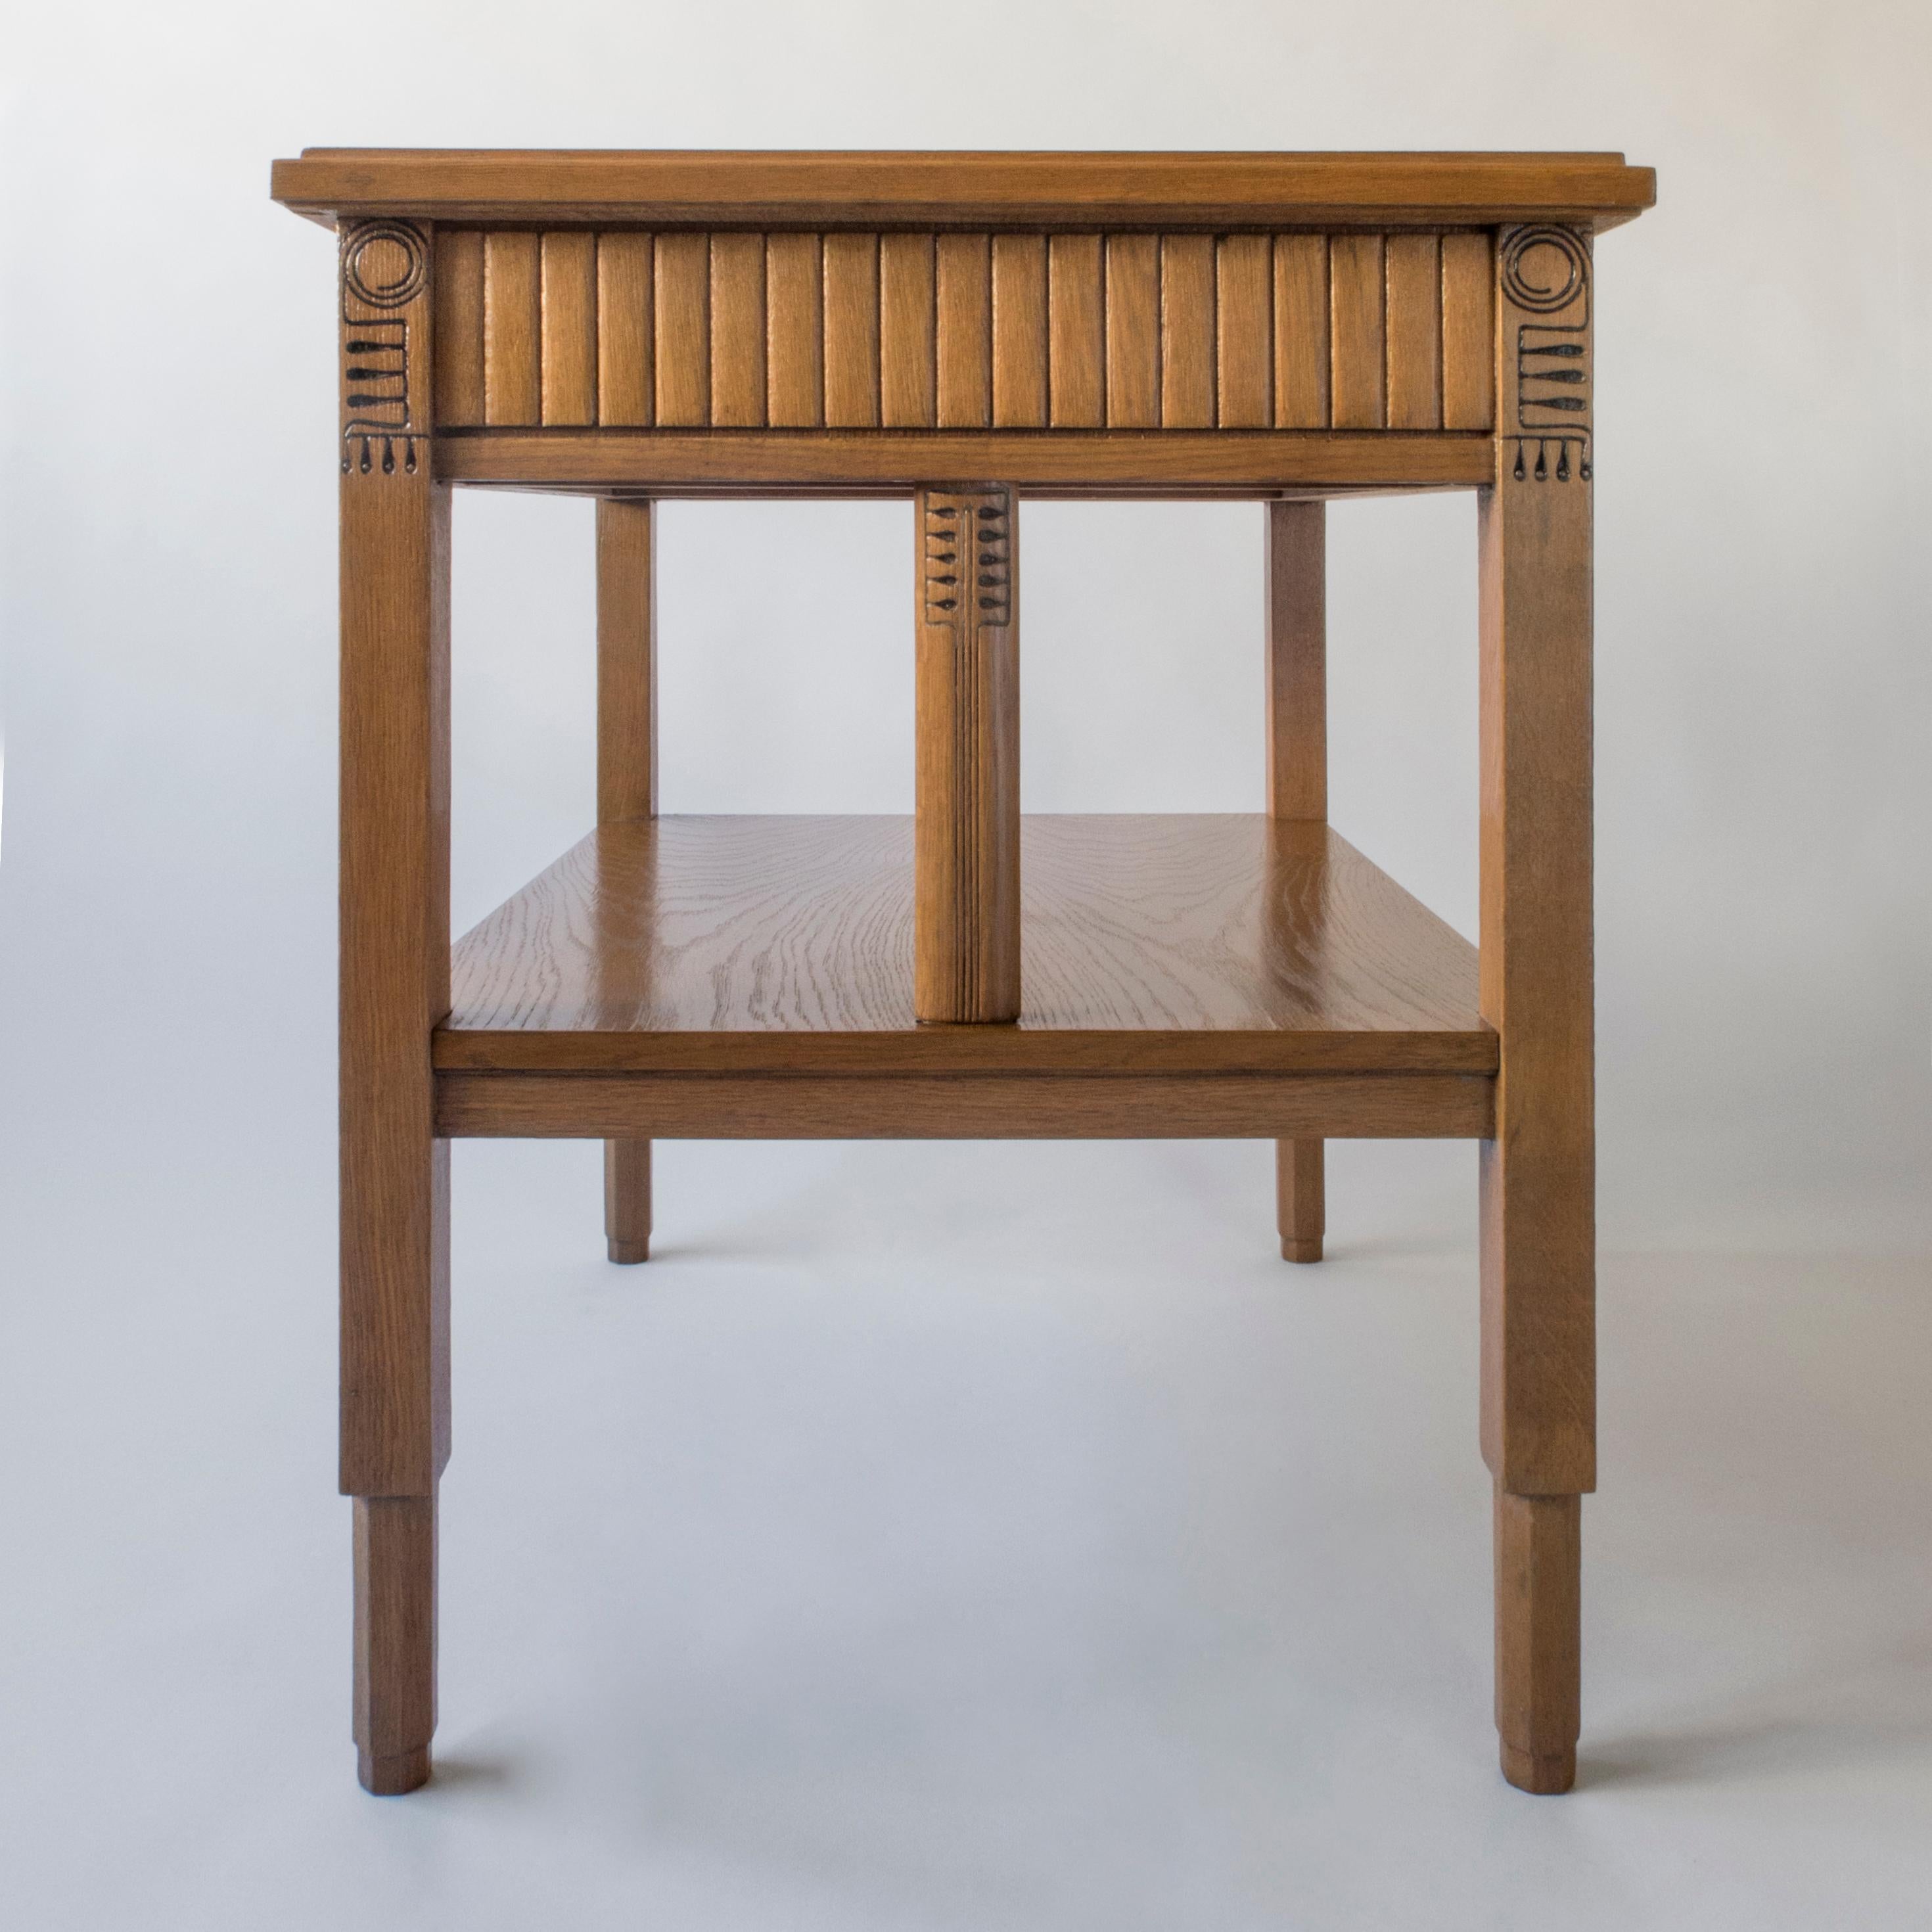 Art Nouveau Manner of Eliel Saarinen, Finnish Carved Oak Two-Tier Jugend Sideboard or Table